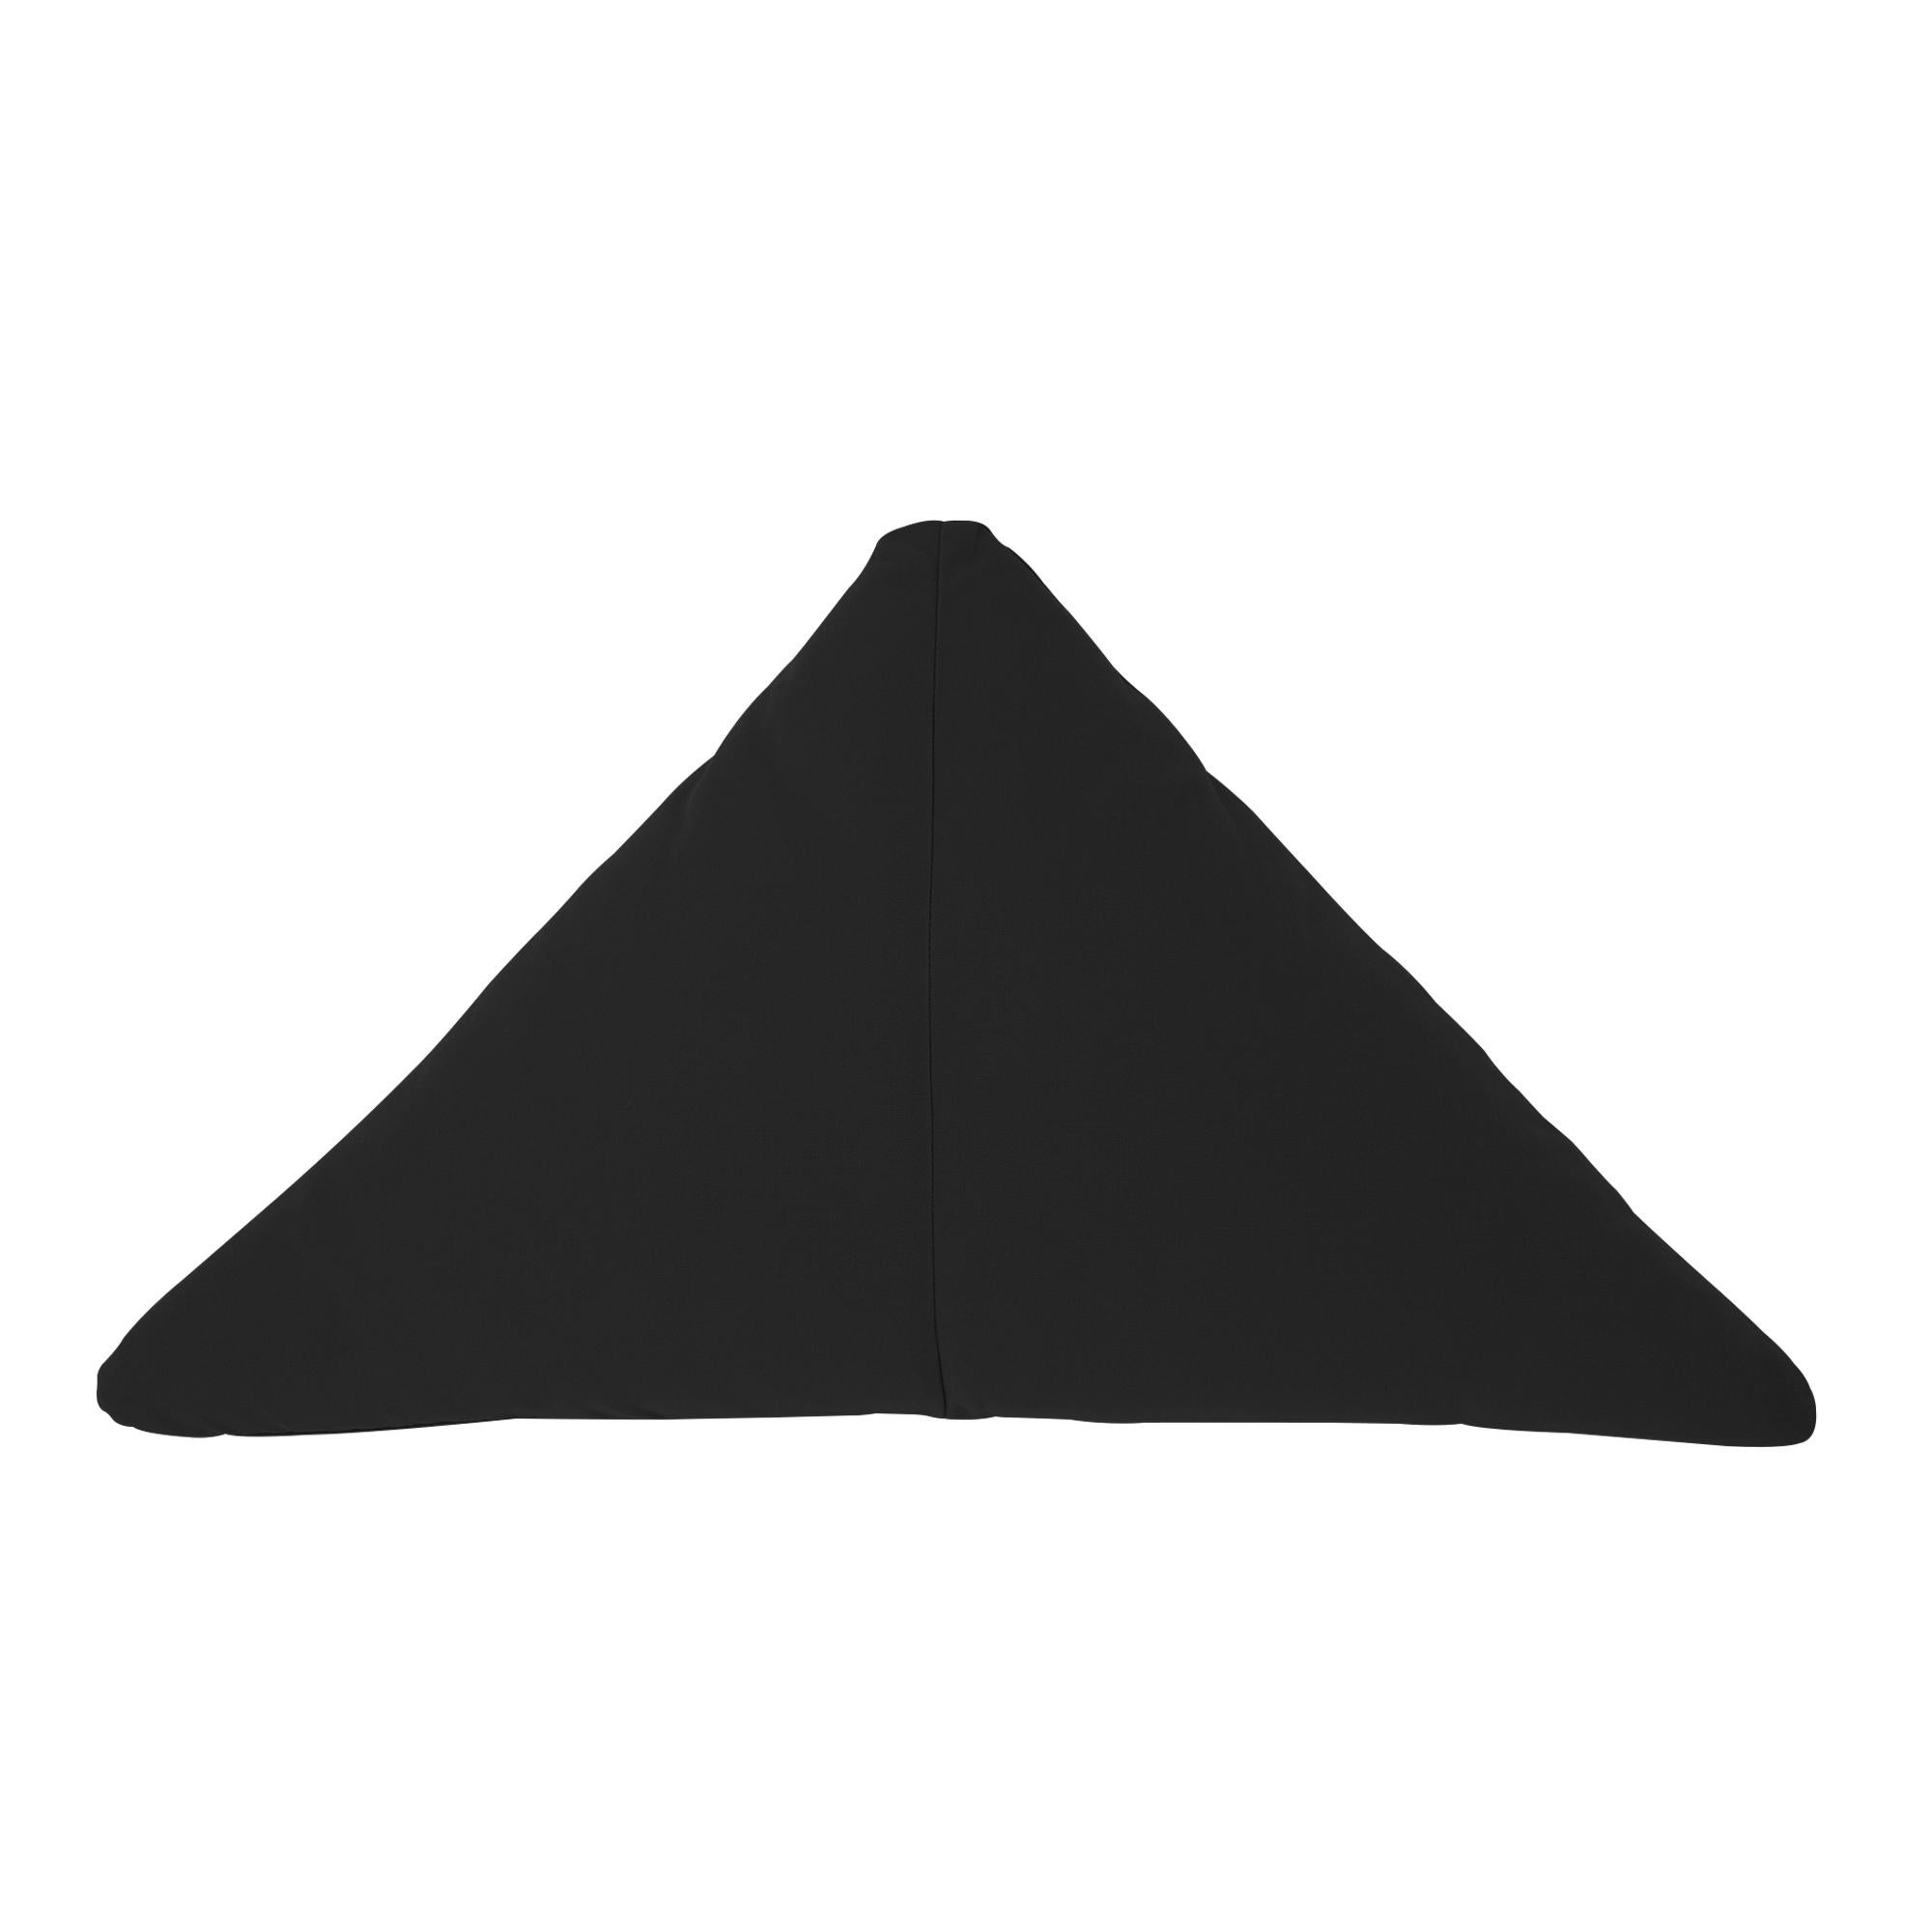 Bend Goods - Triangle Throw Pillow in Aruba Sunbrella In New Condition For Sale In Ontario, CA